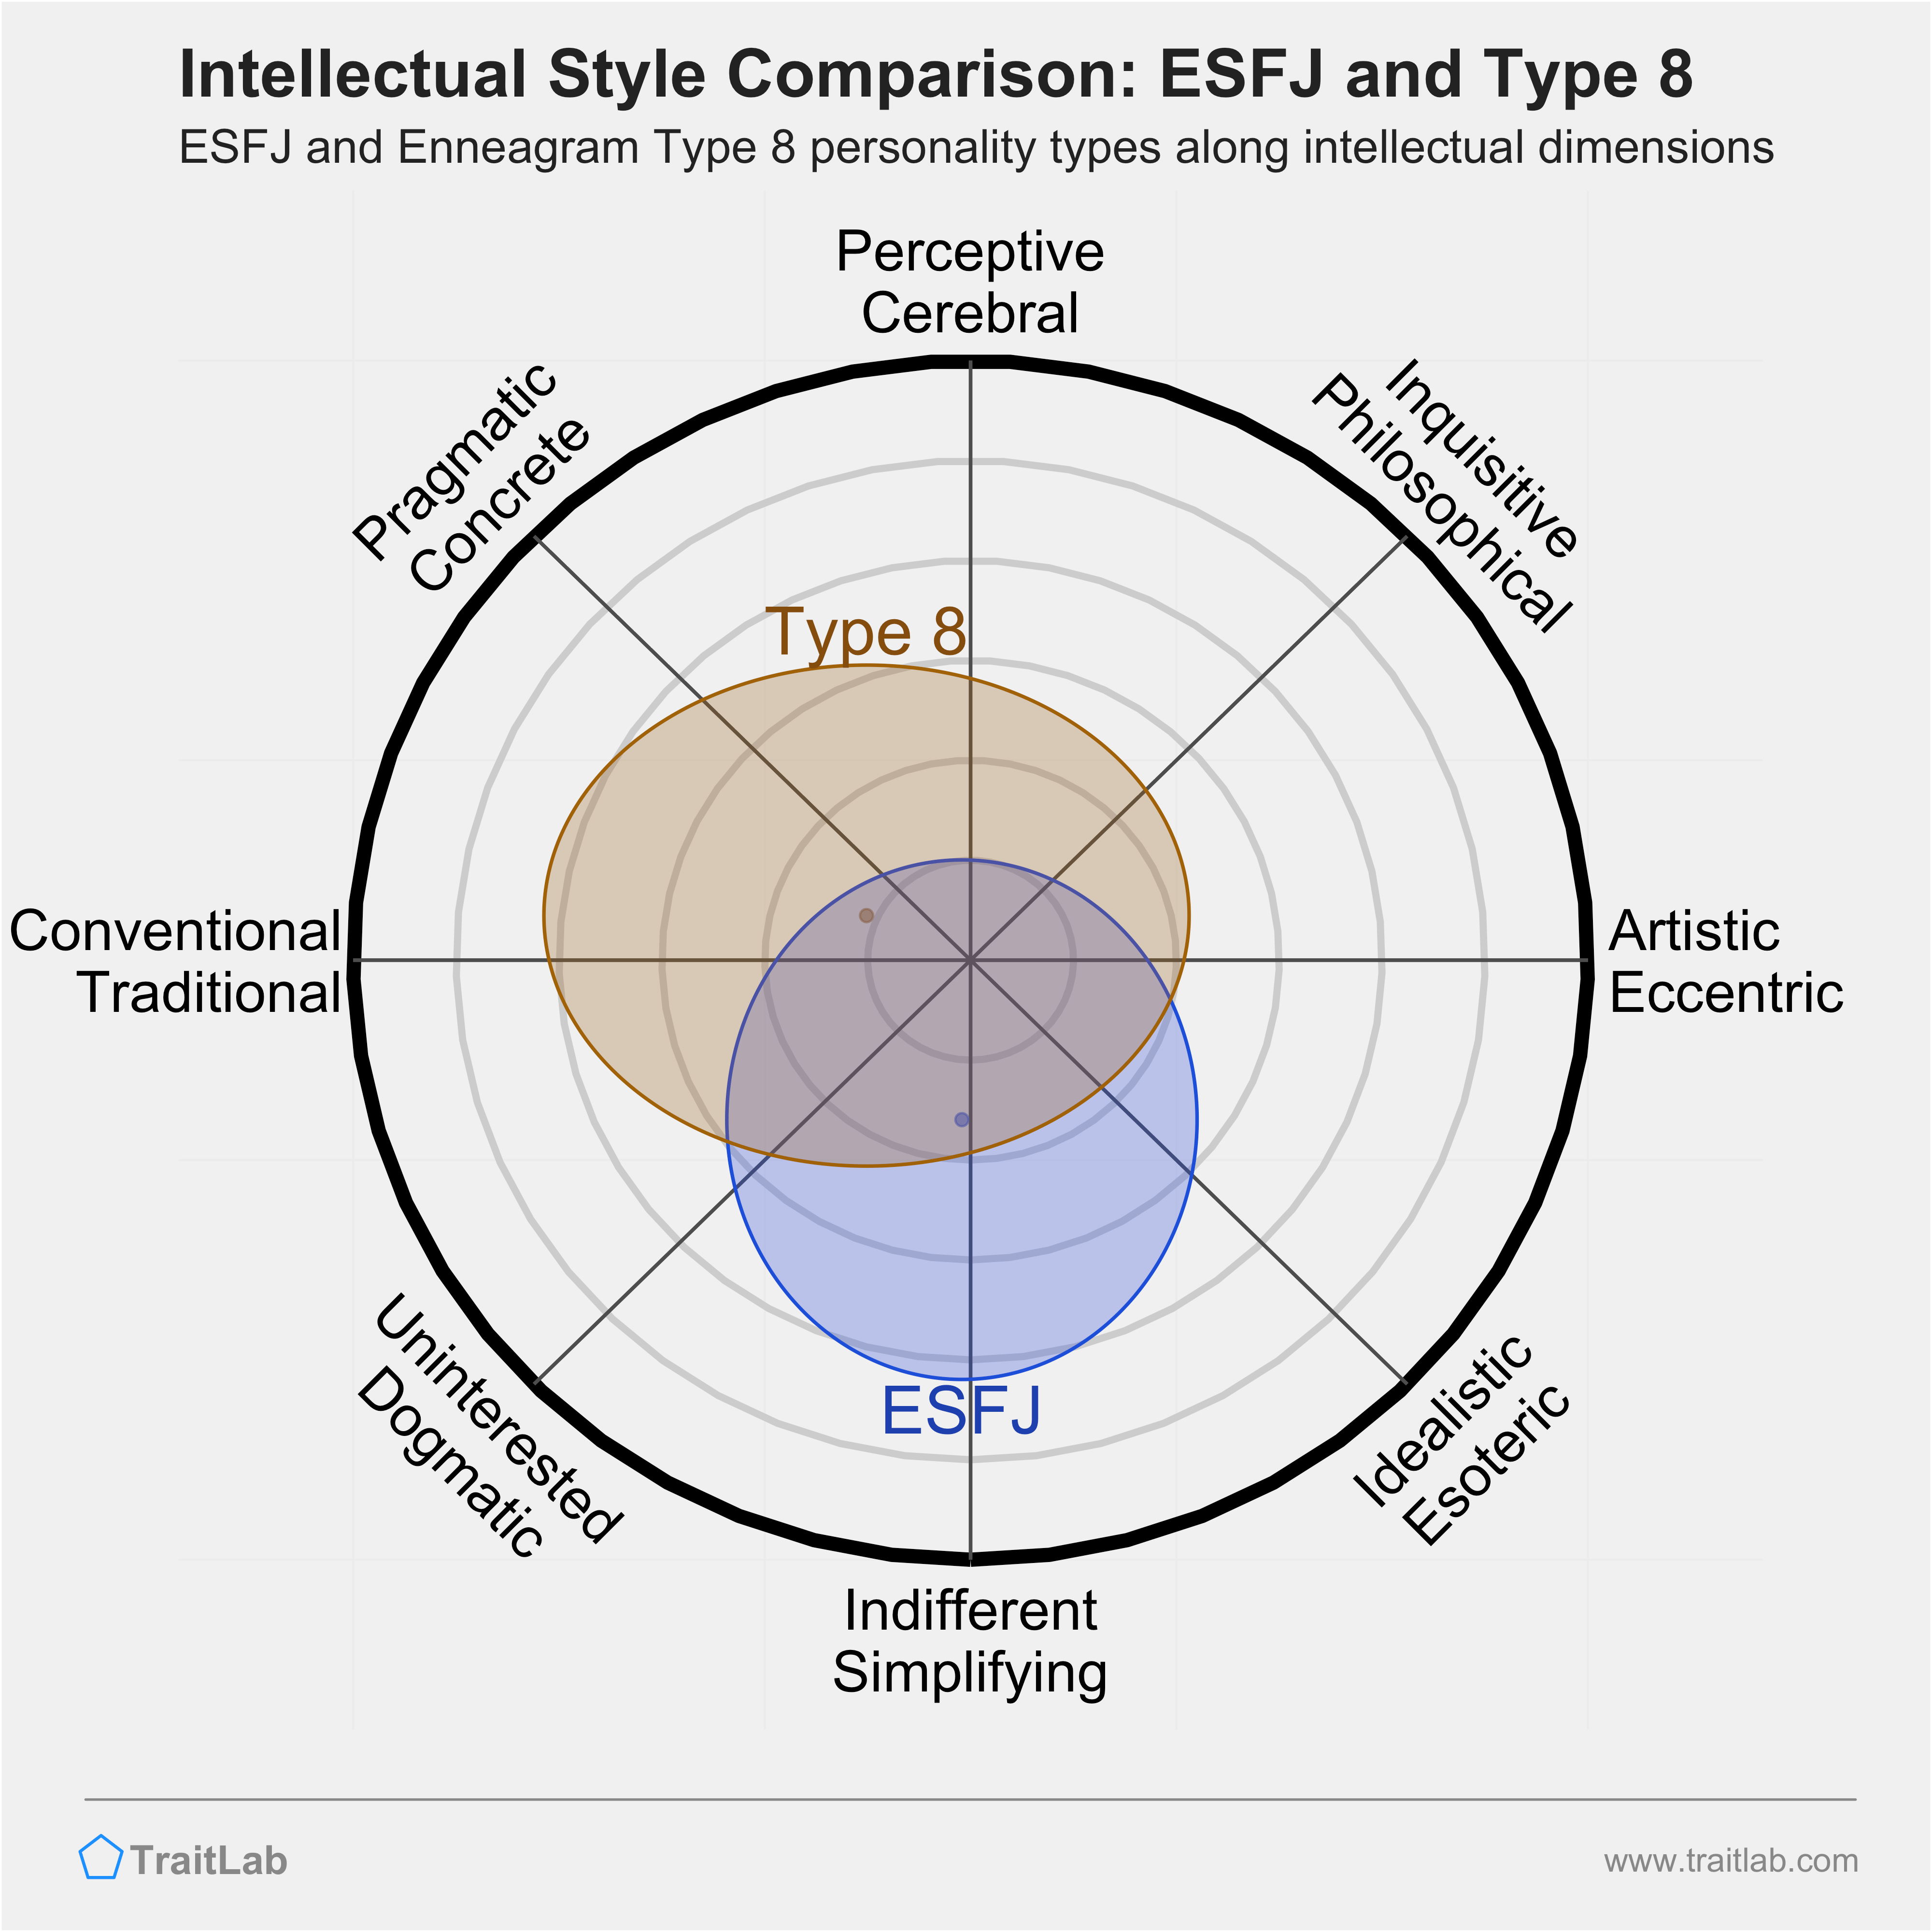 ESFJ and Type 8 comparison across intellectual dimensions